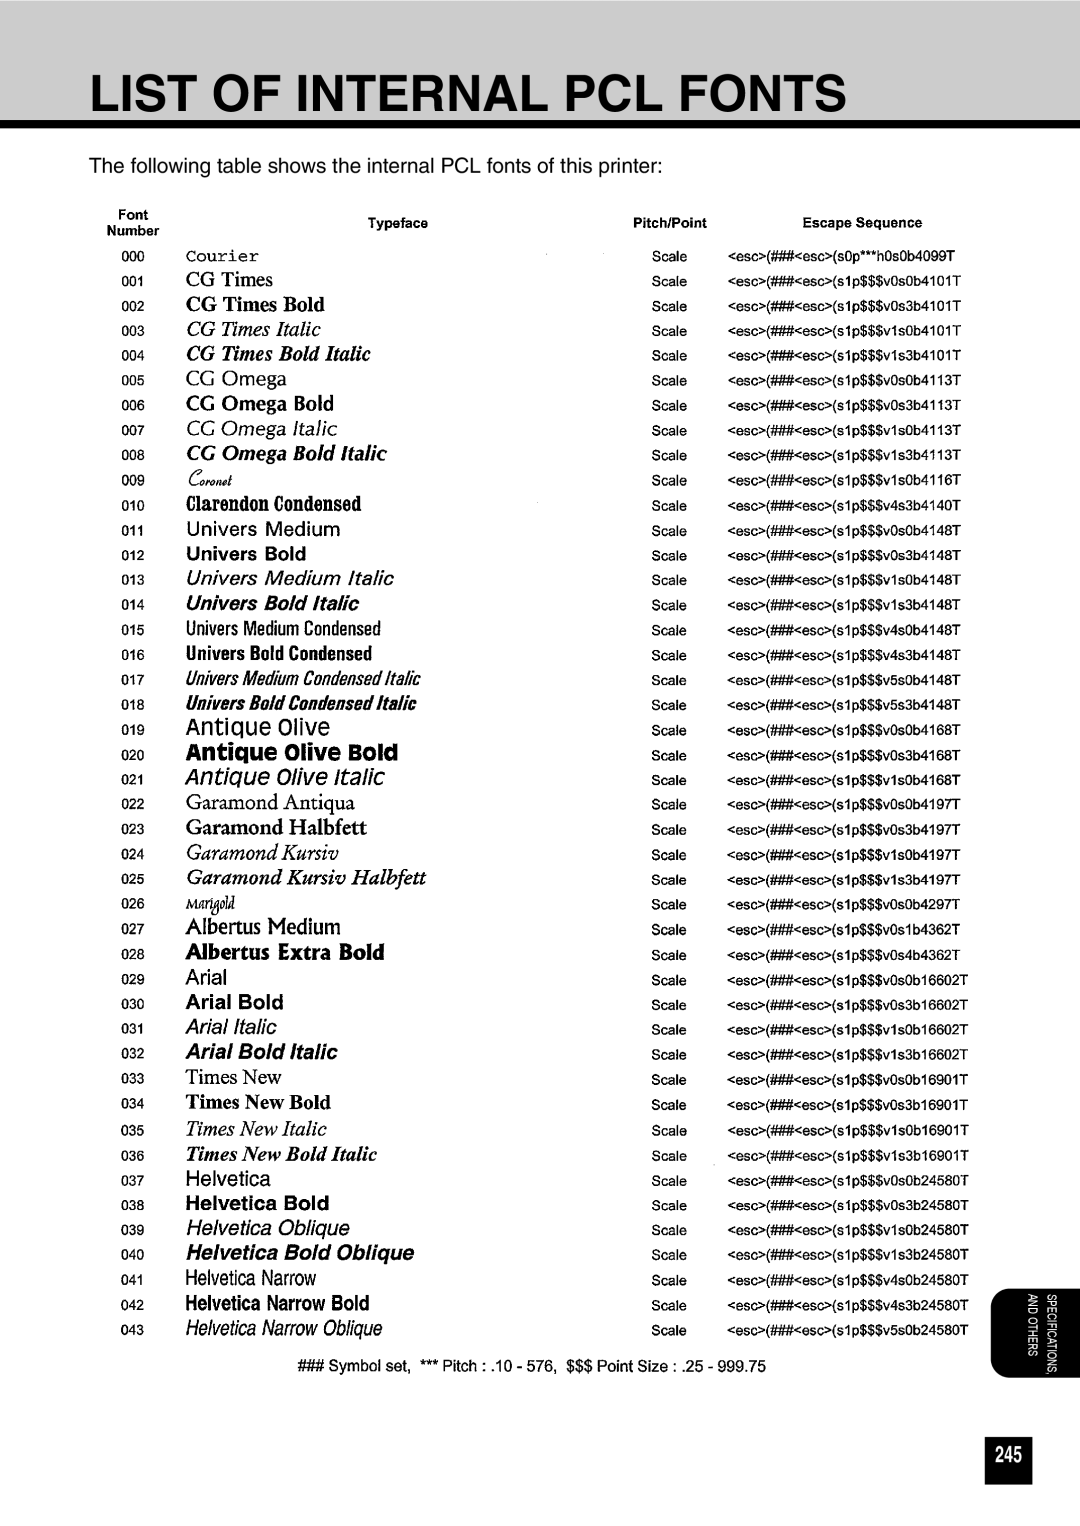 Toshiba GA-1031 manual List of Internal PCL Fonts, 245 